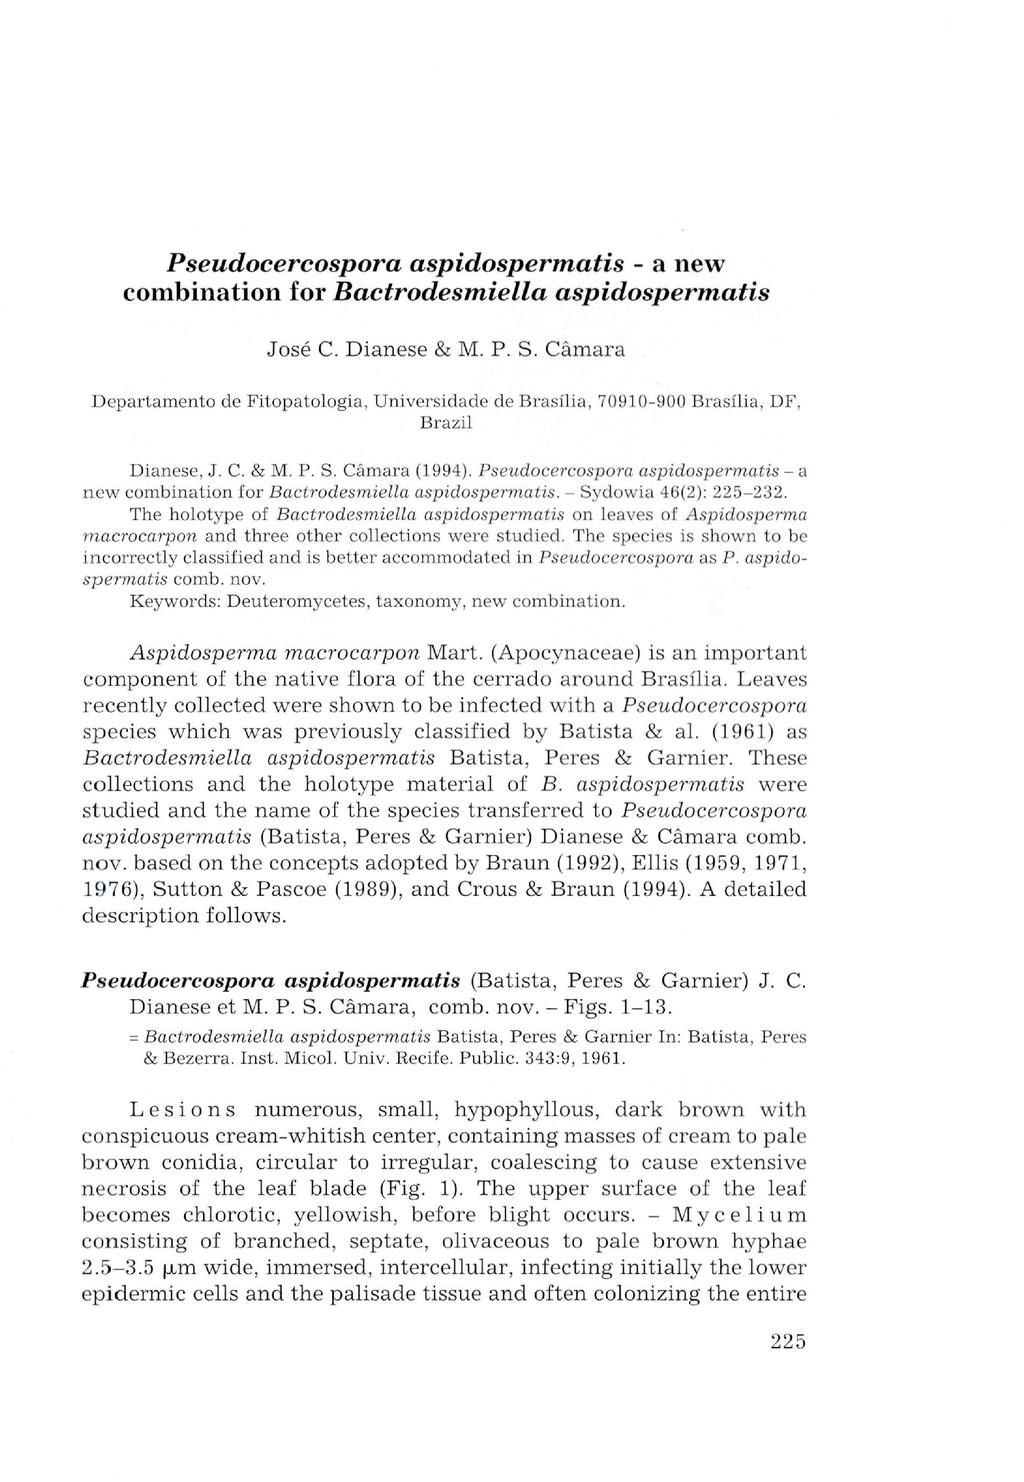 Pseudocercospora aspidospermatis - a new combination for Bactrodesmiella aspidospermatis Jose C. Dianese & M. P. S.